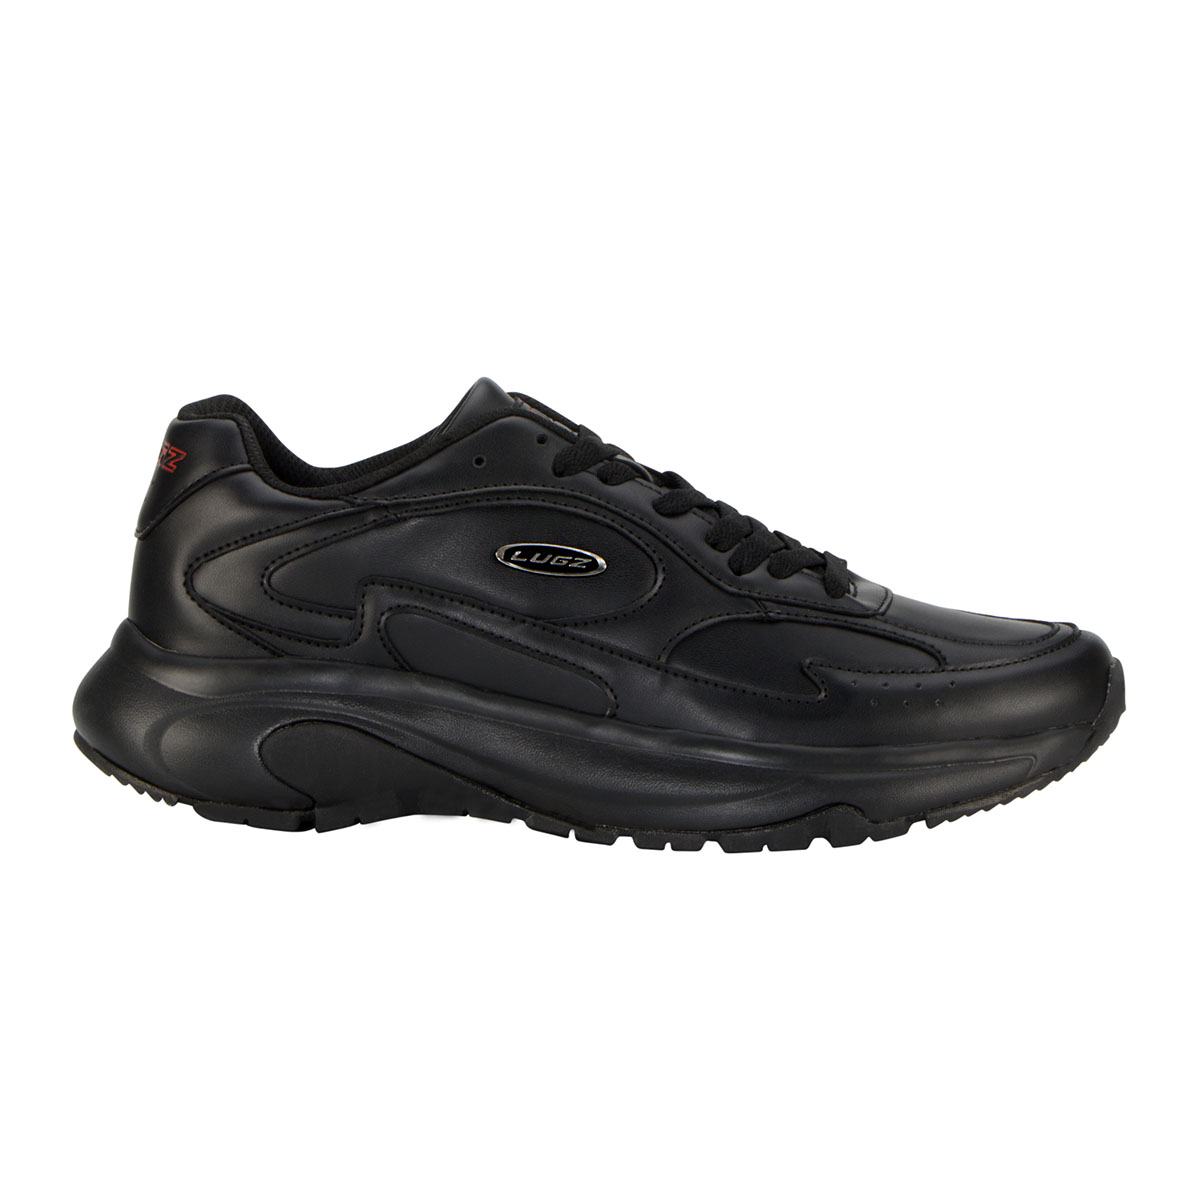 Lugz Men's Typhoon Oxford Sneakers - image 2 of 7